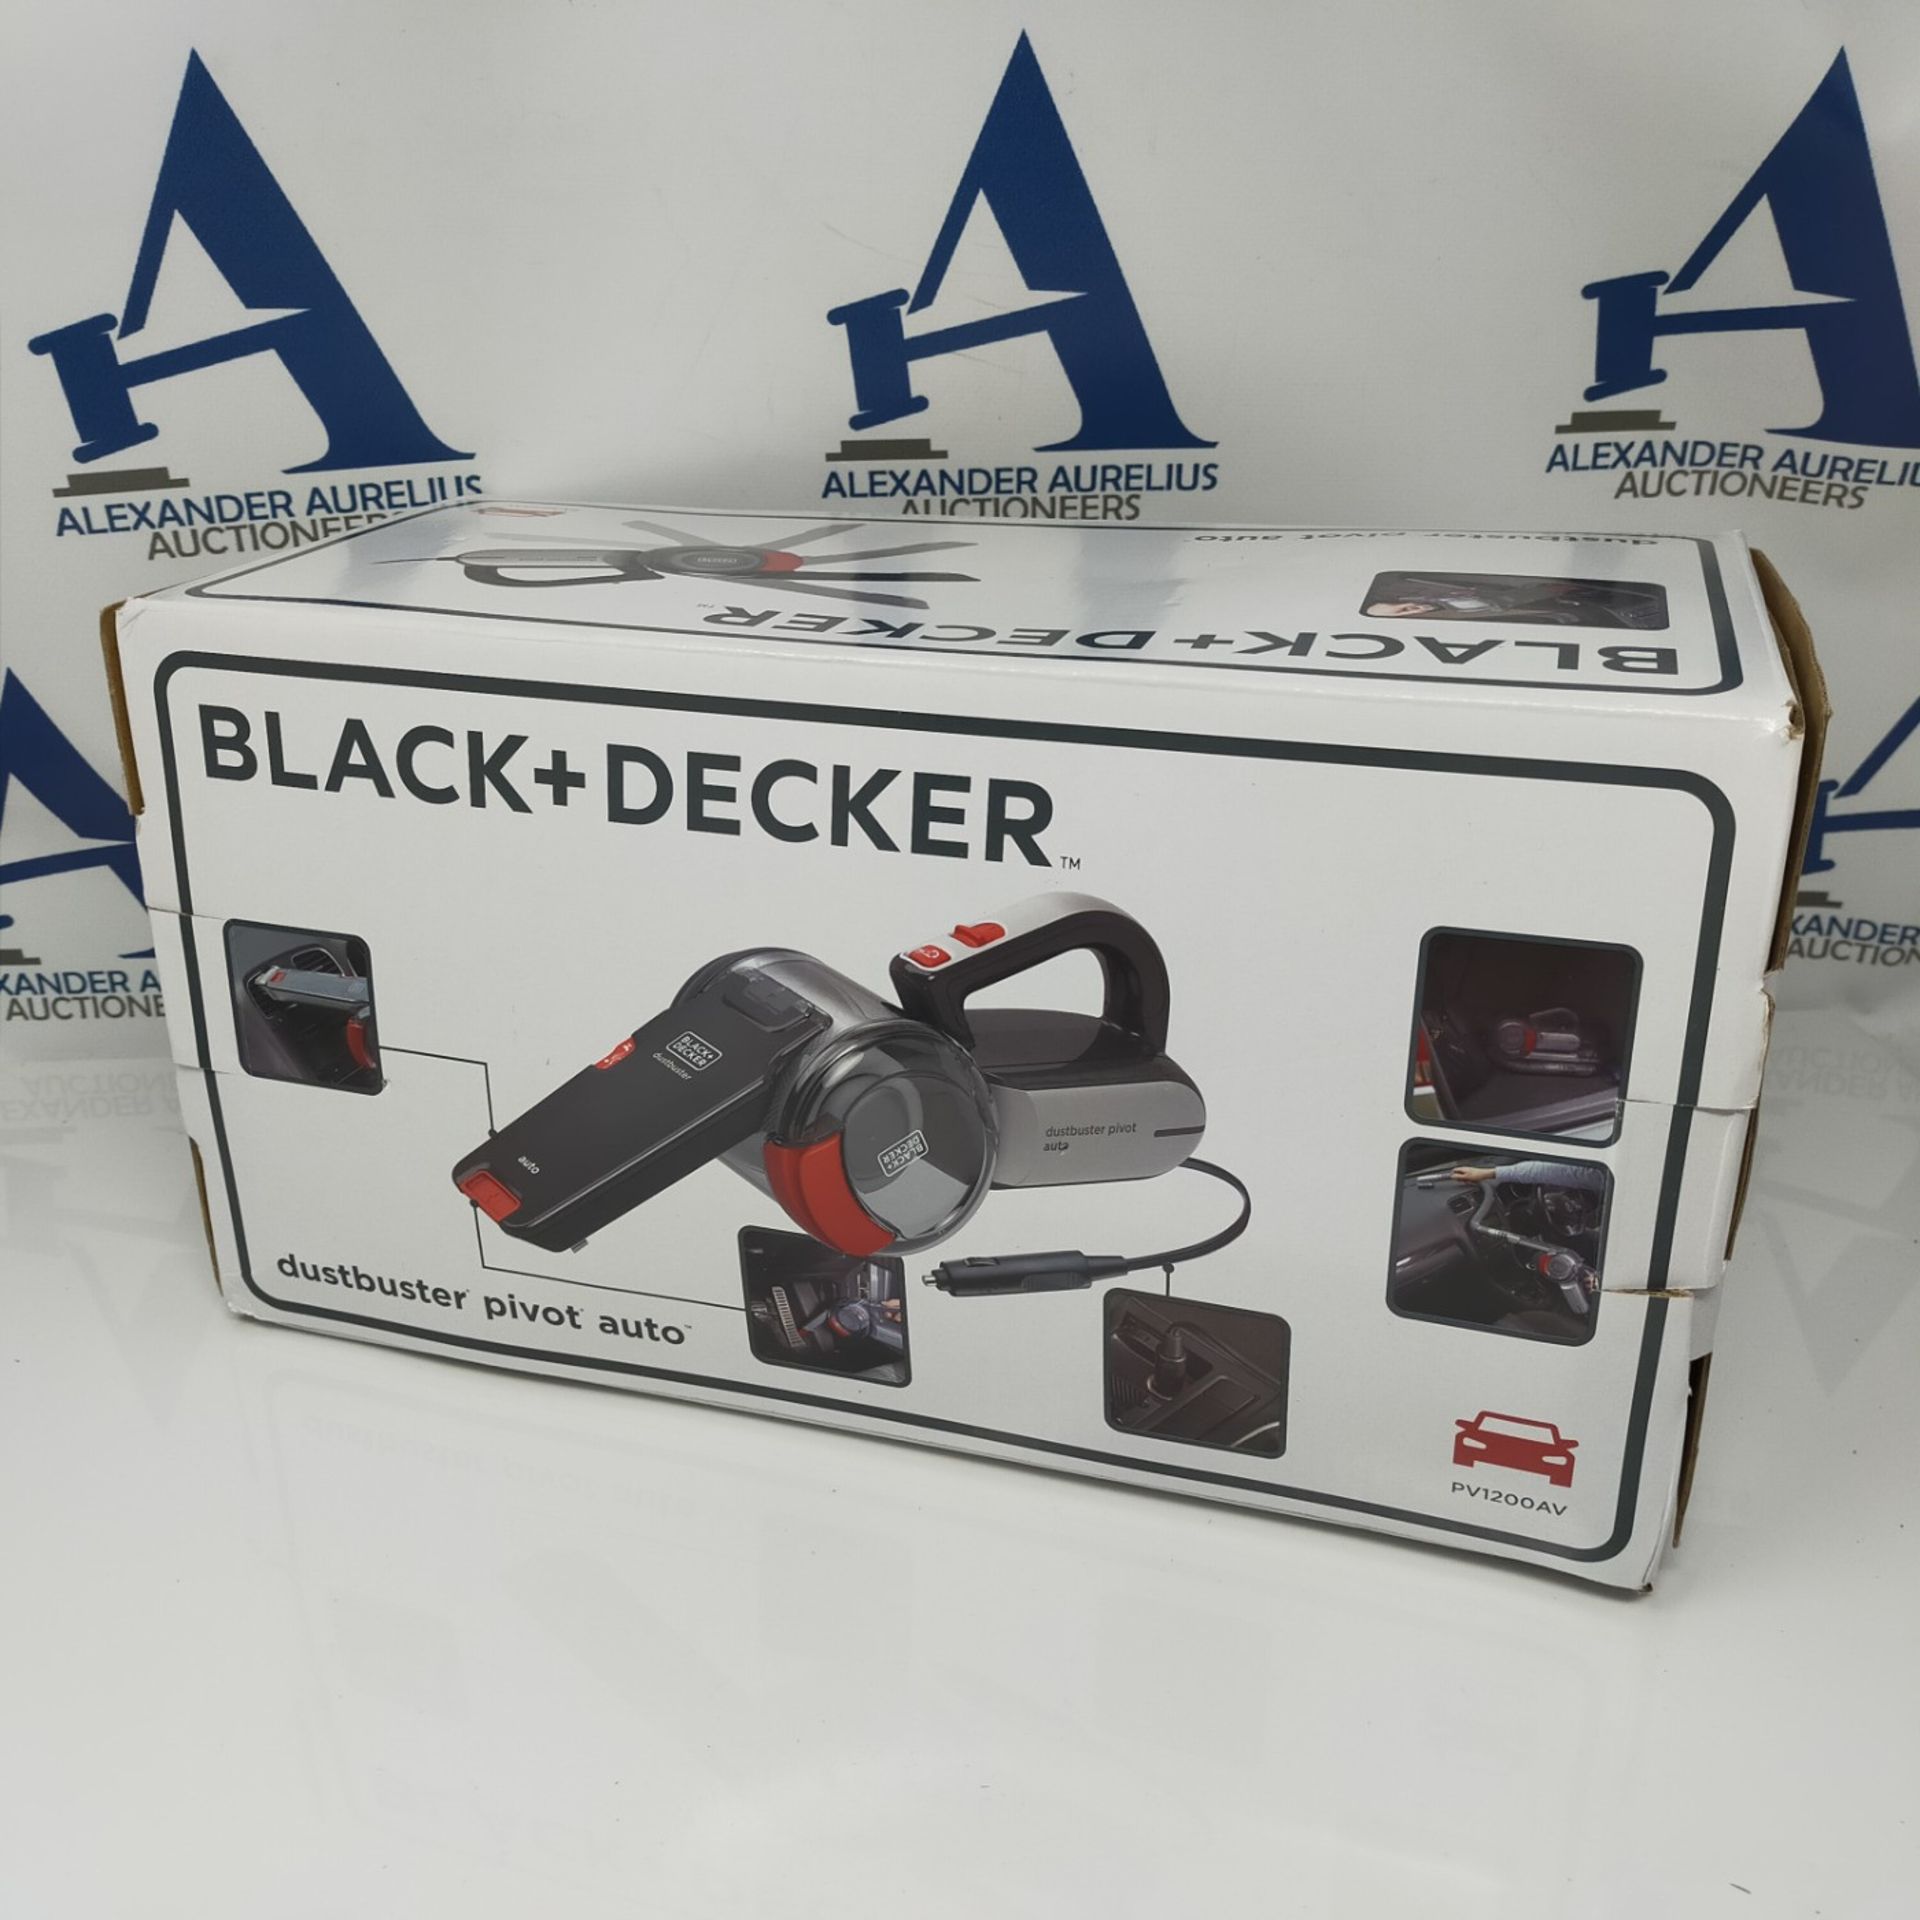 BLACK+DECKER PV1200AV-XJ Car Vac, Grey/Red - Image 2 of 3